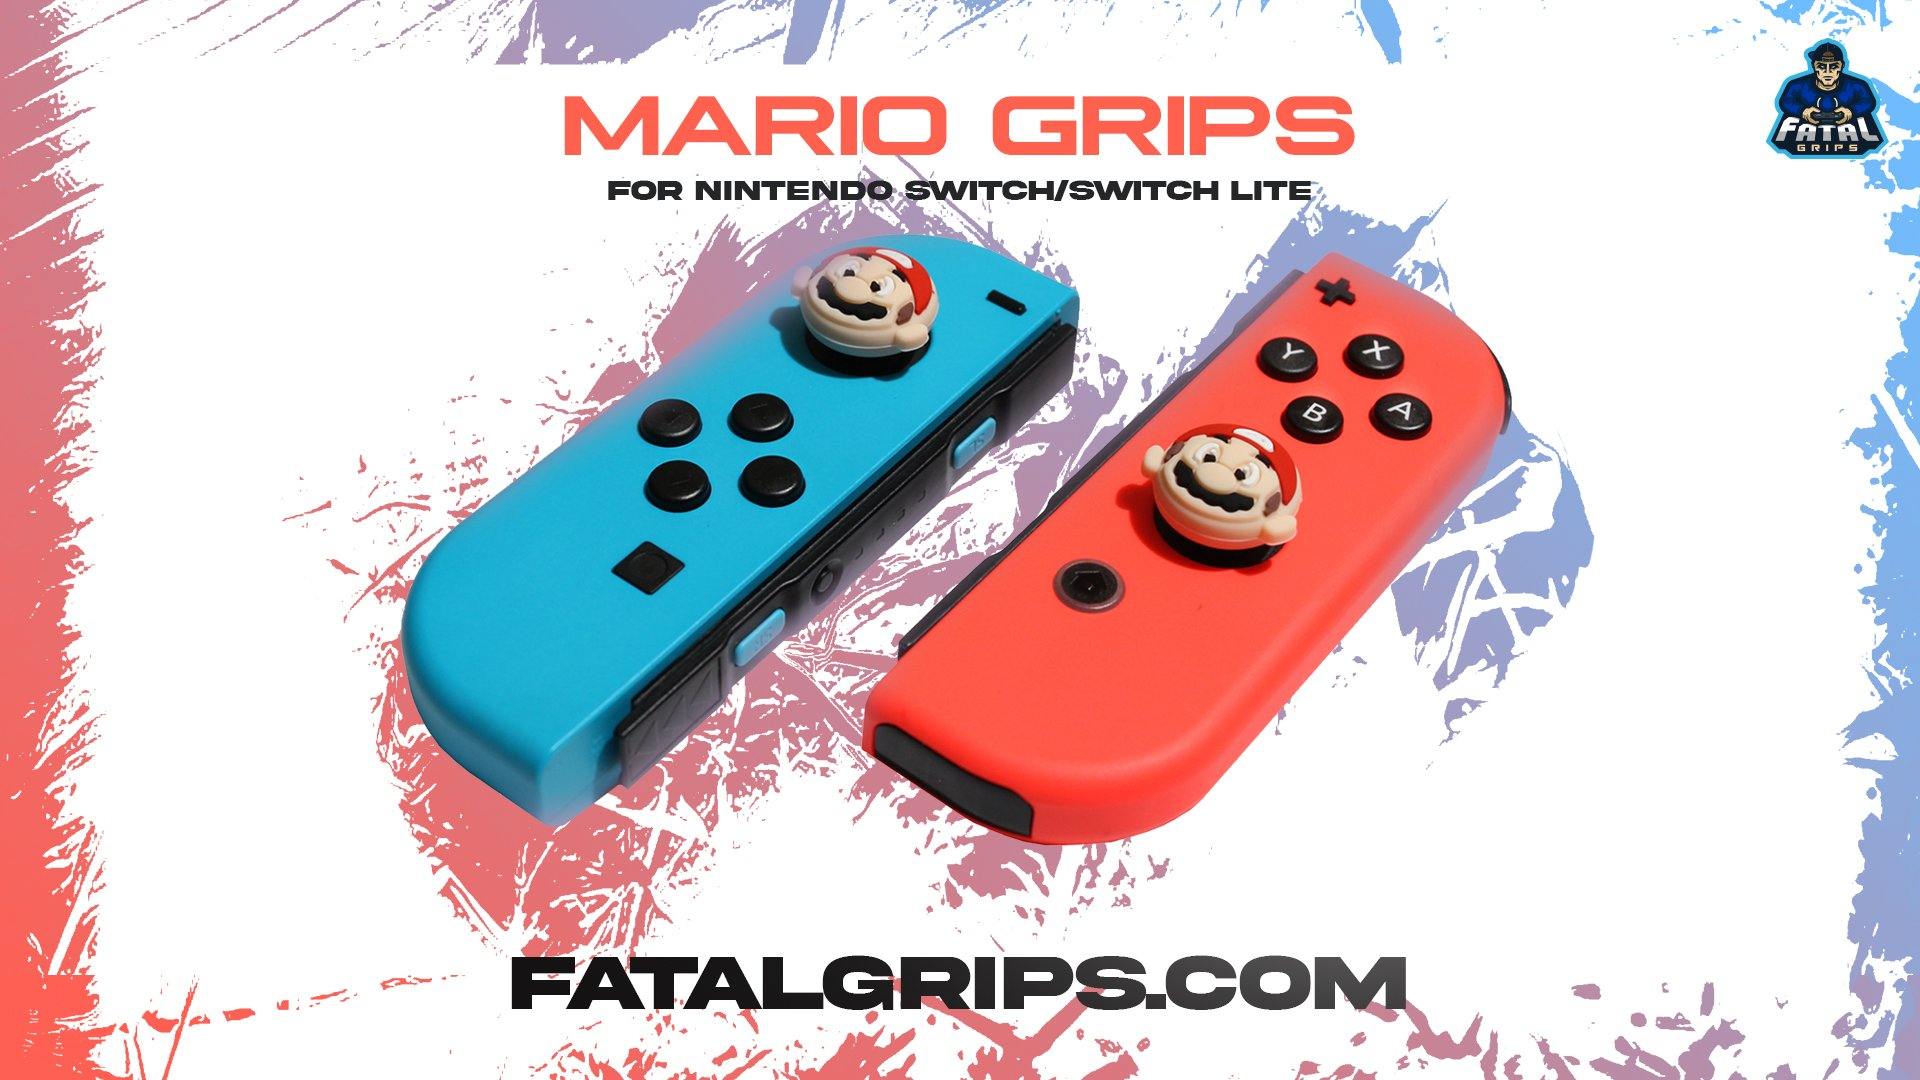 Mario Grips - Fatal Grips